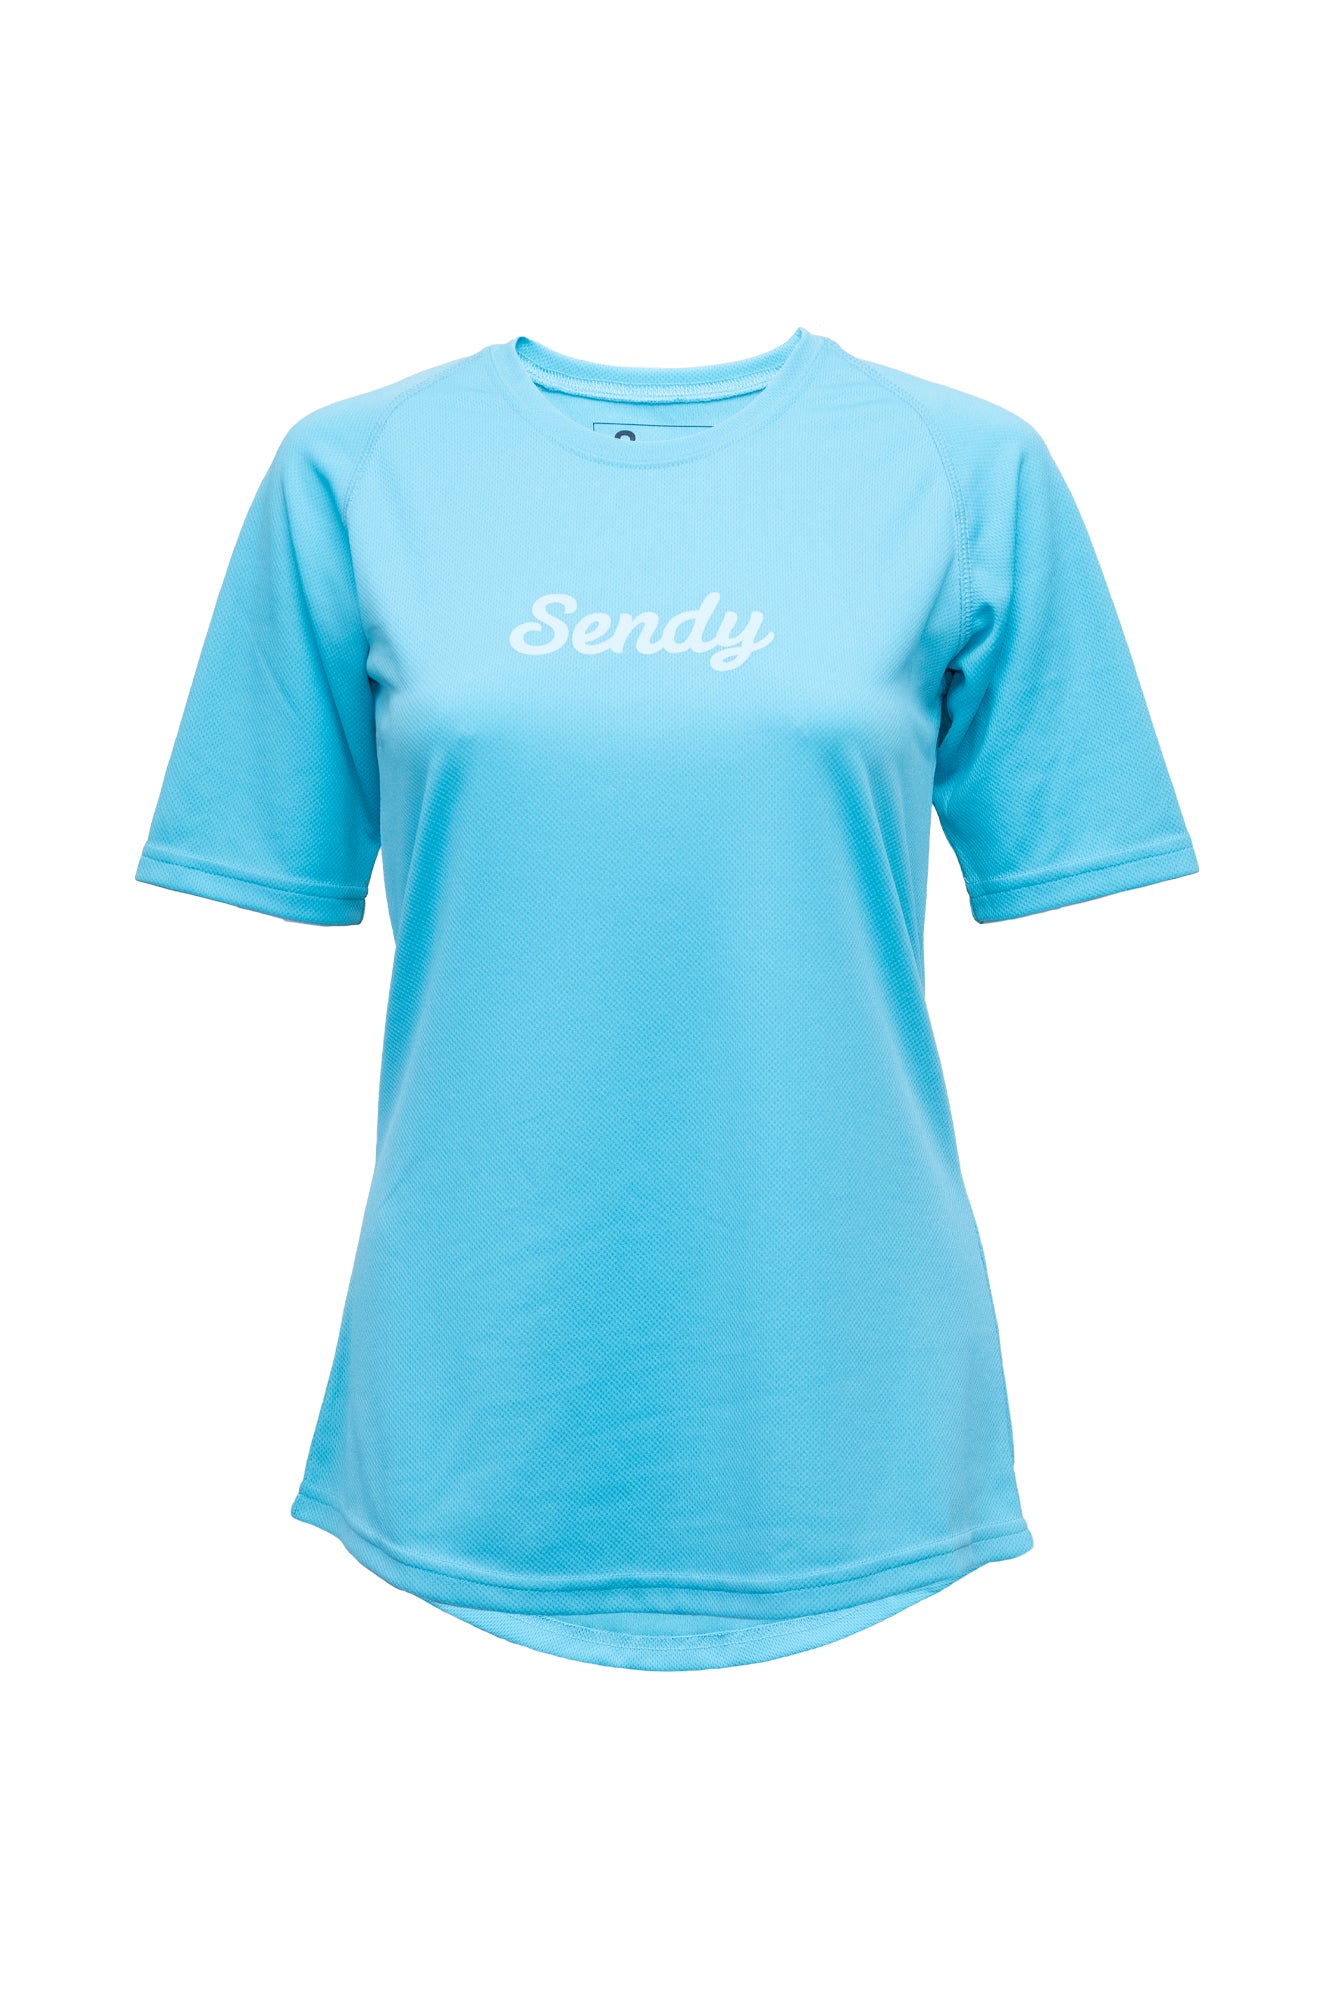 Send It Women's Short Sleeved MTB Jersey | The Gem